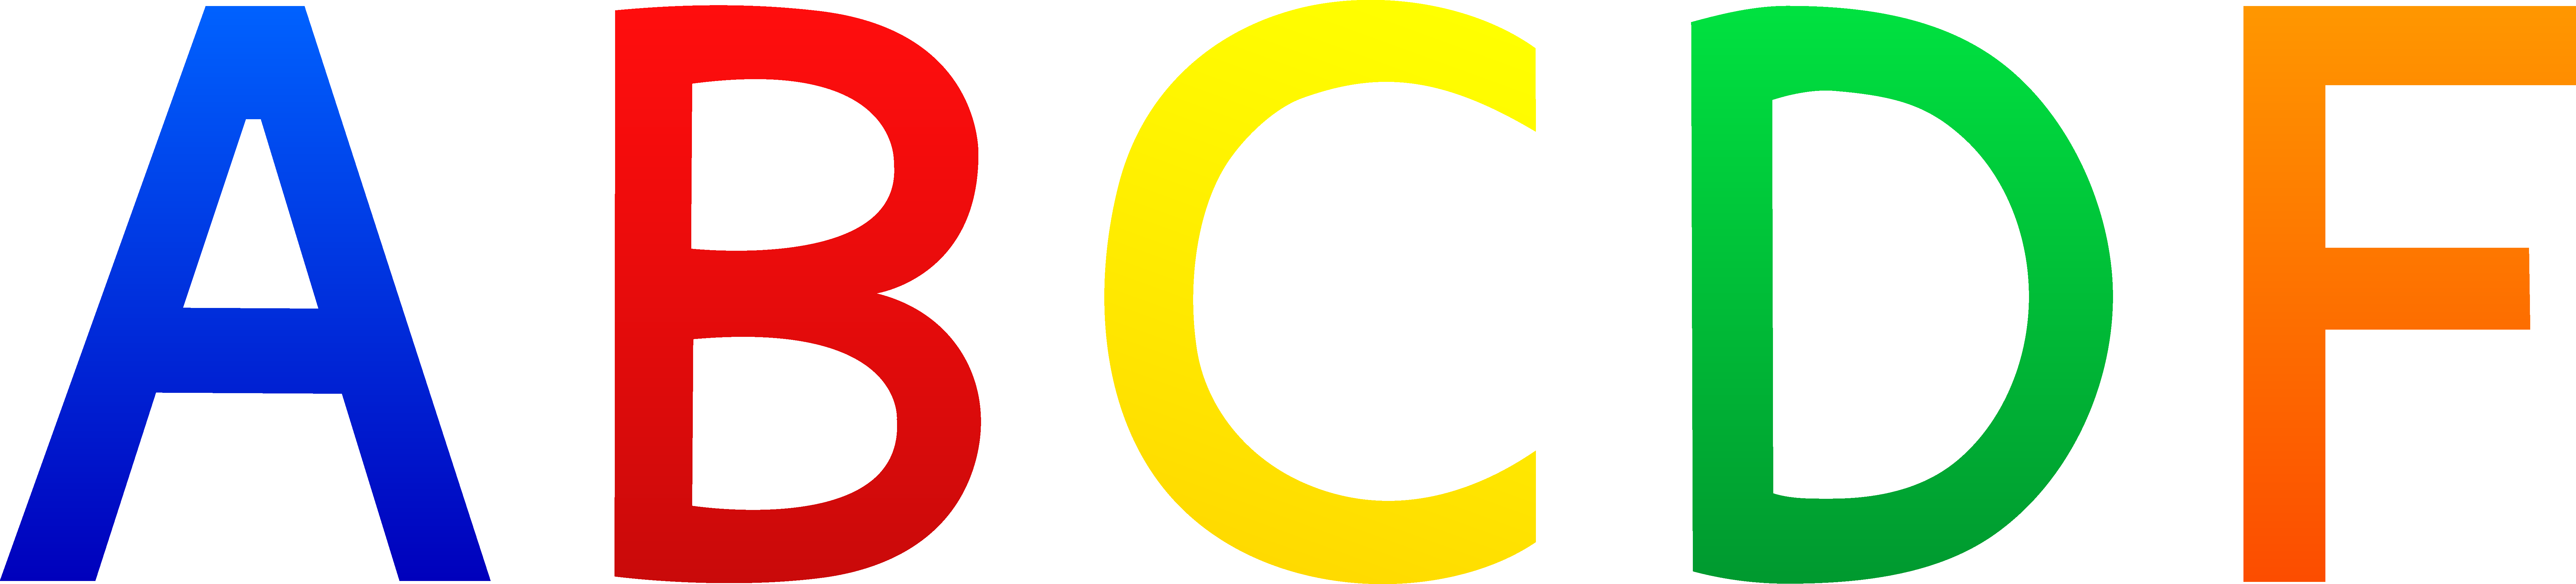 Free Alphabet Clipart - Tumundografico